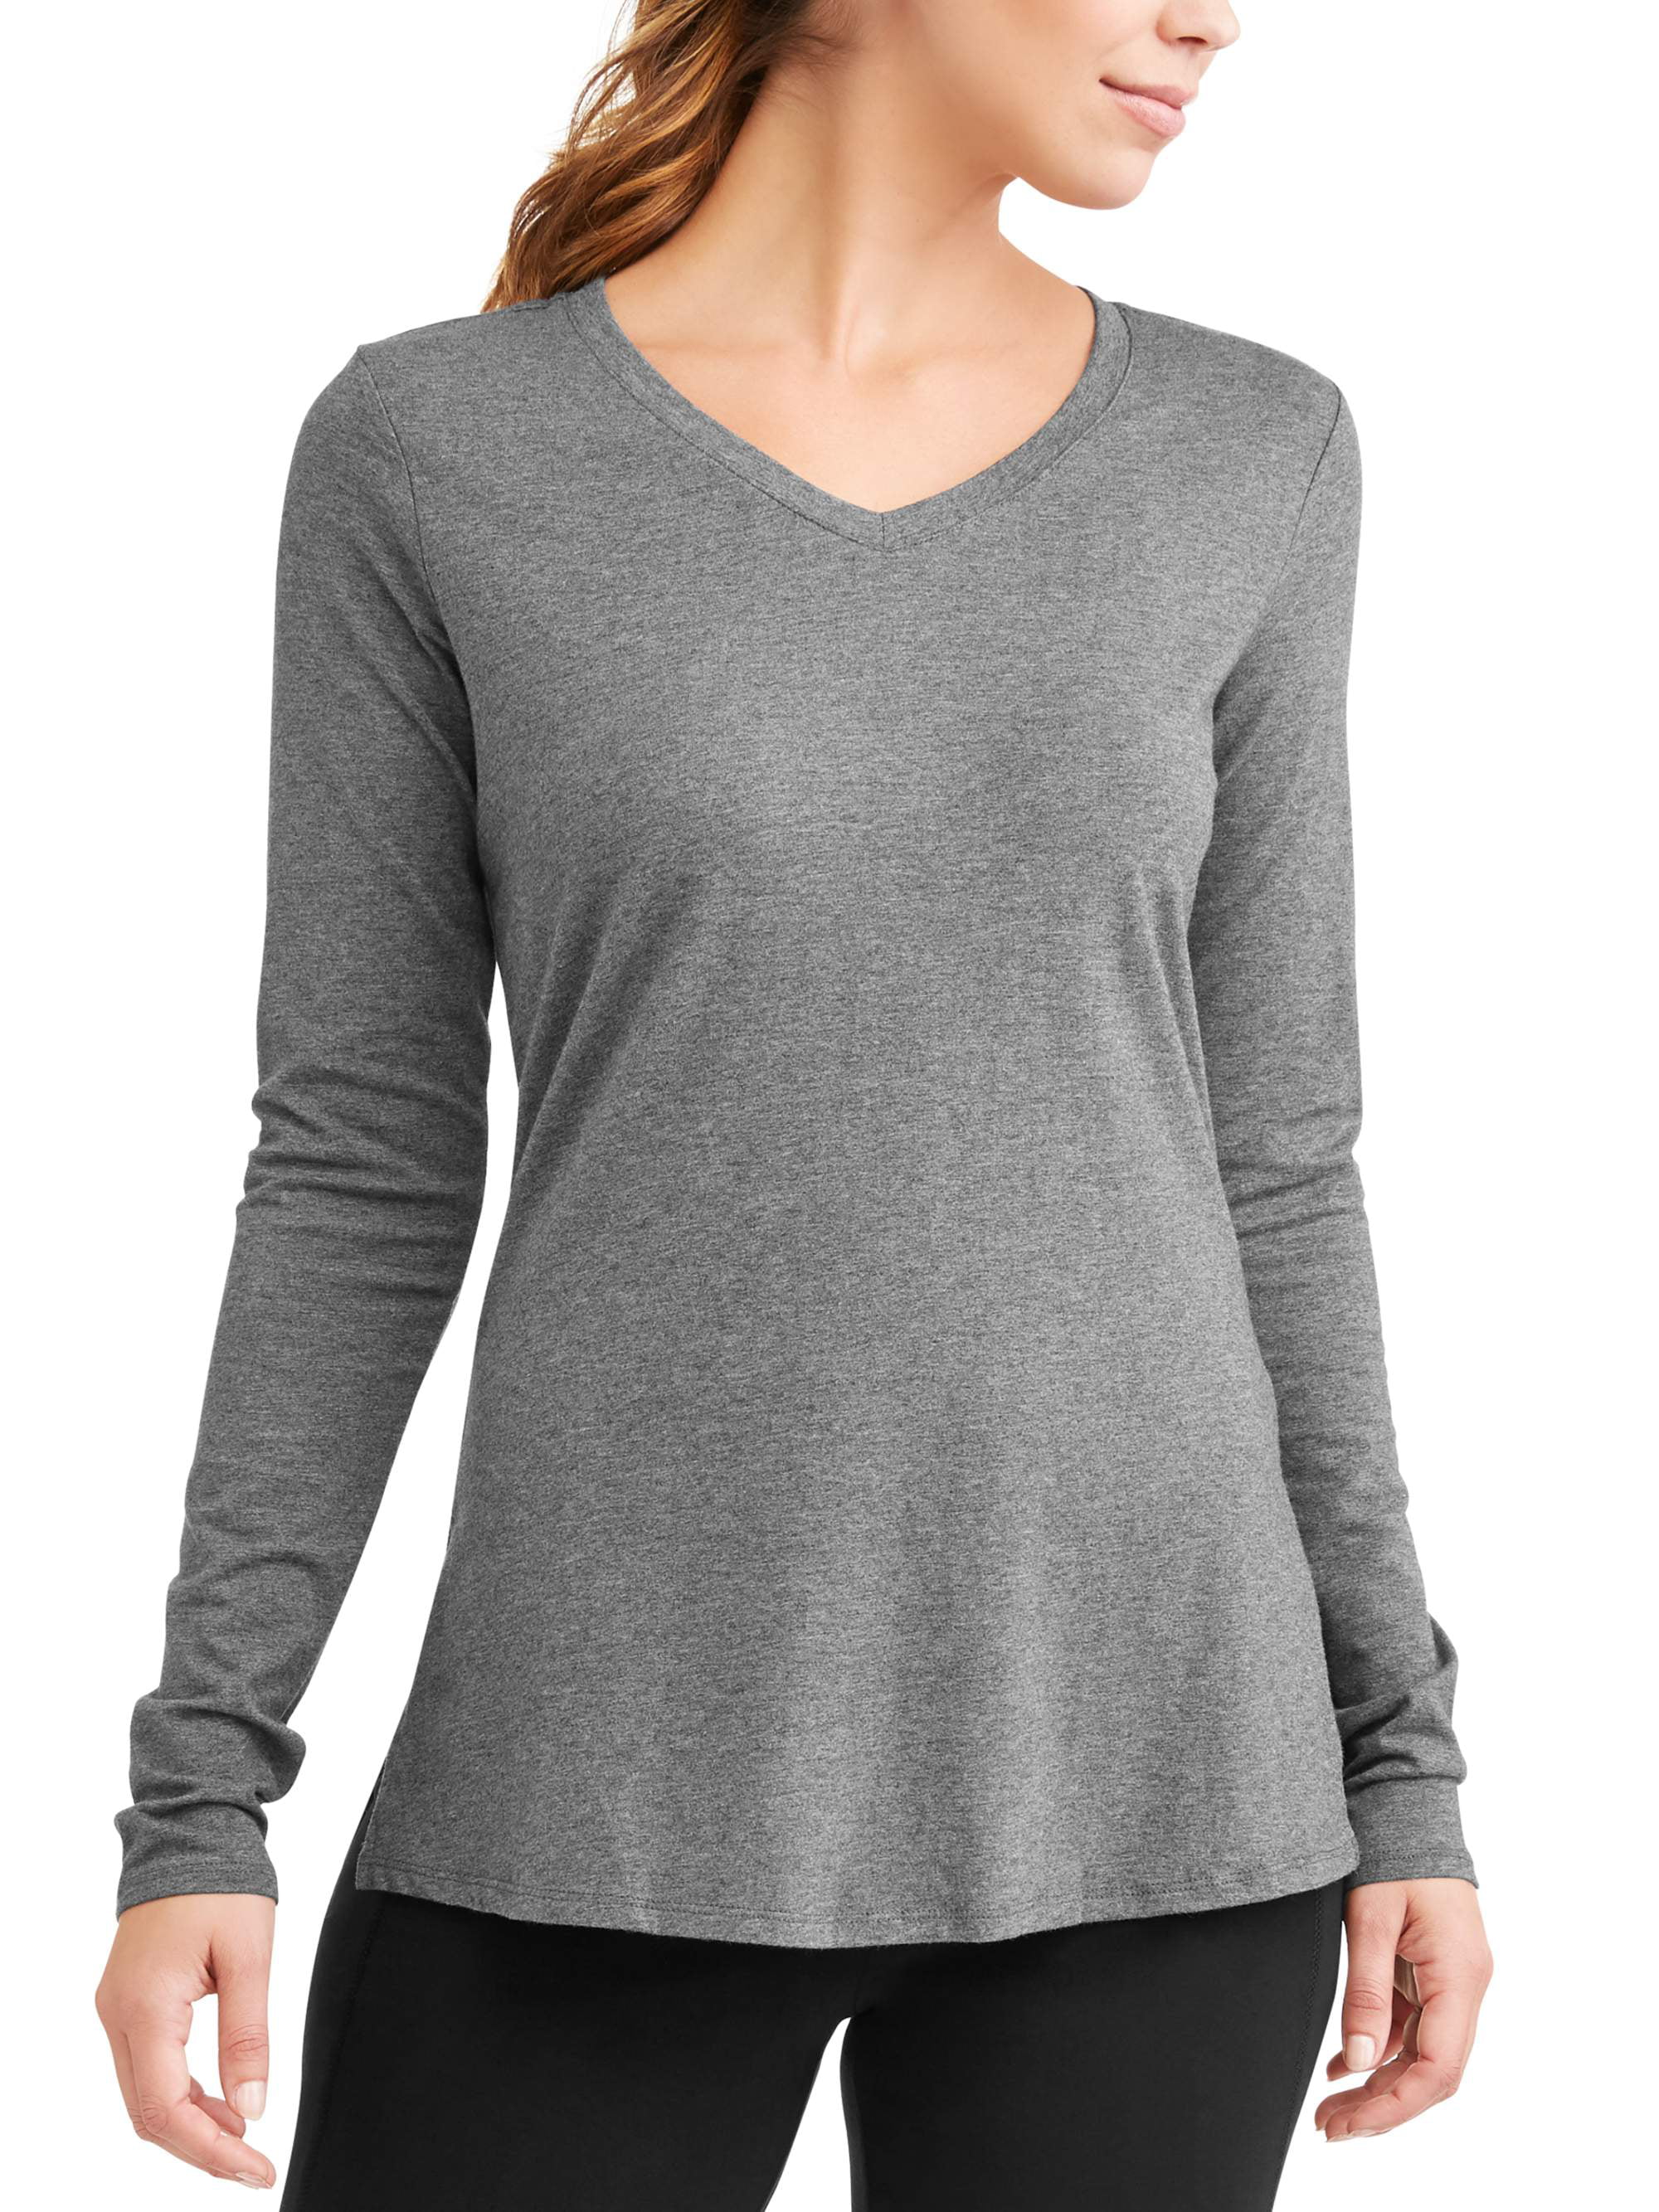 Women's Active Long Sleeve Super Soft Yoga T-Shirt - Walmart.com